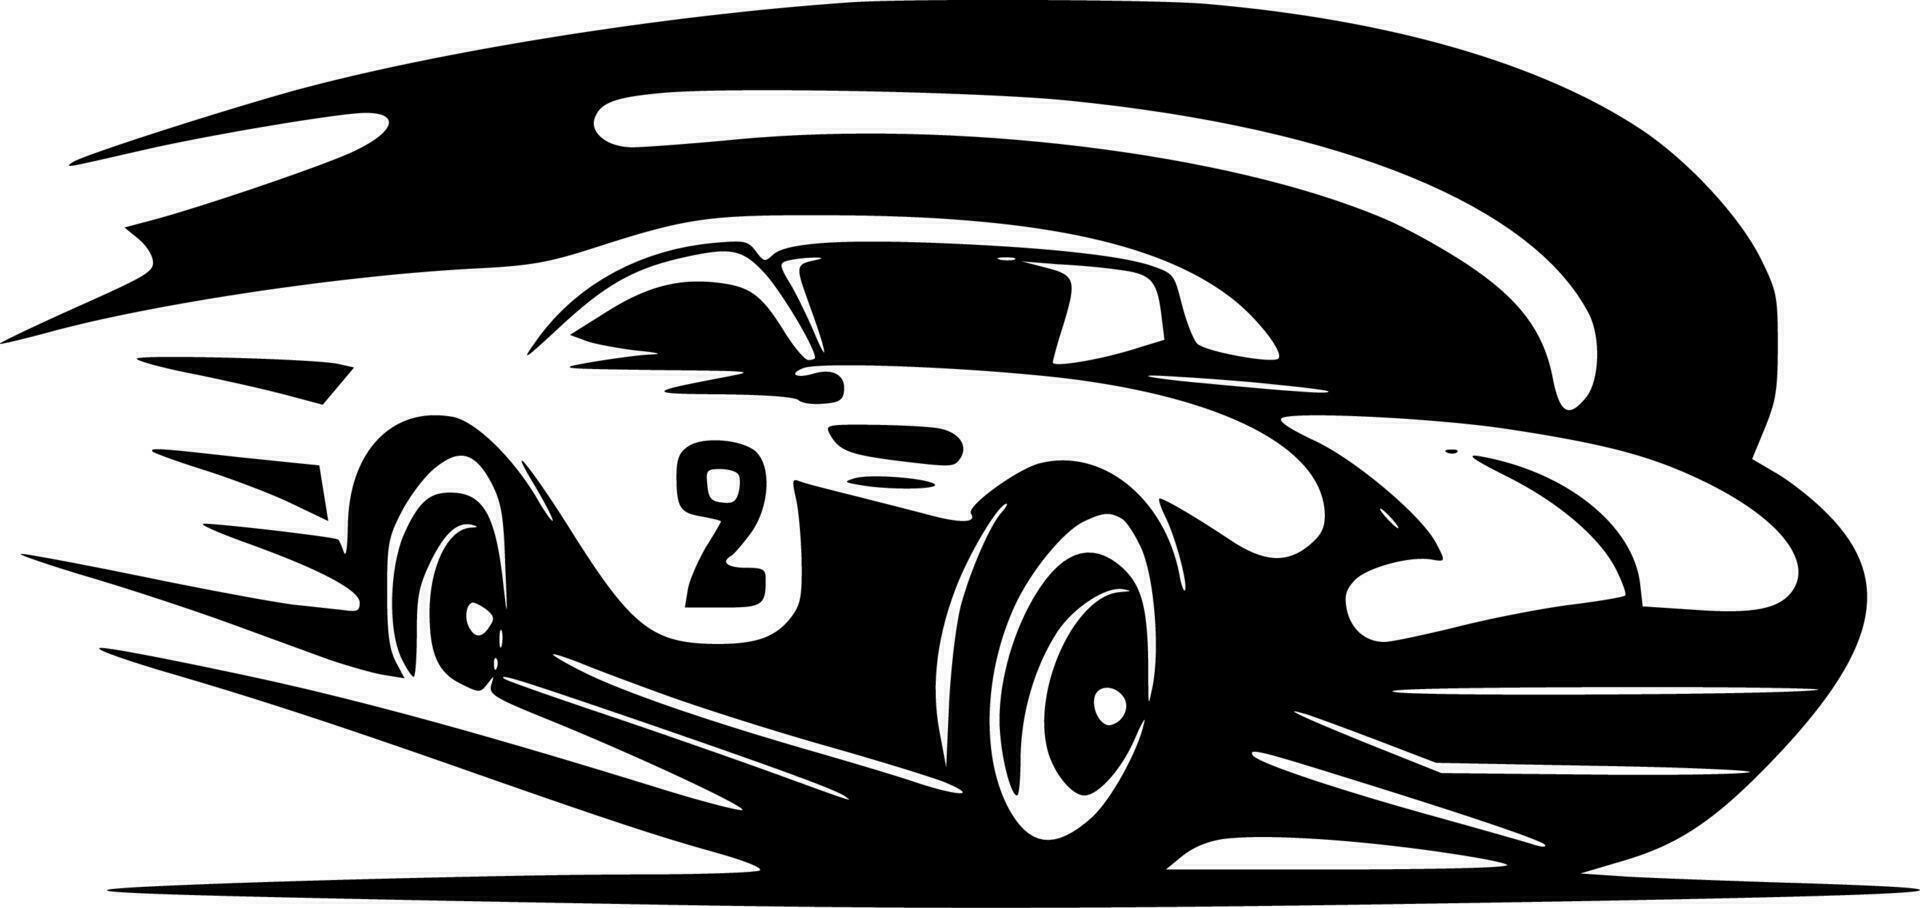 Racing, Minimalist and Simple Silhouette - Vector illustration